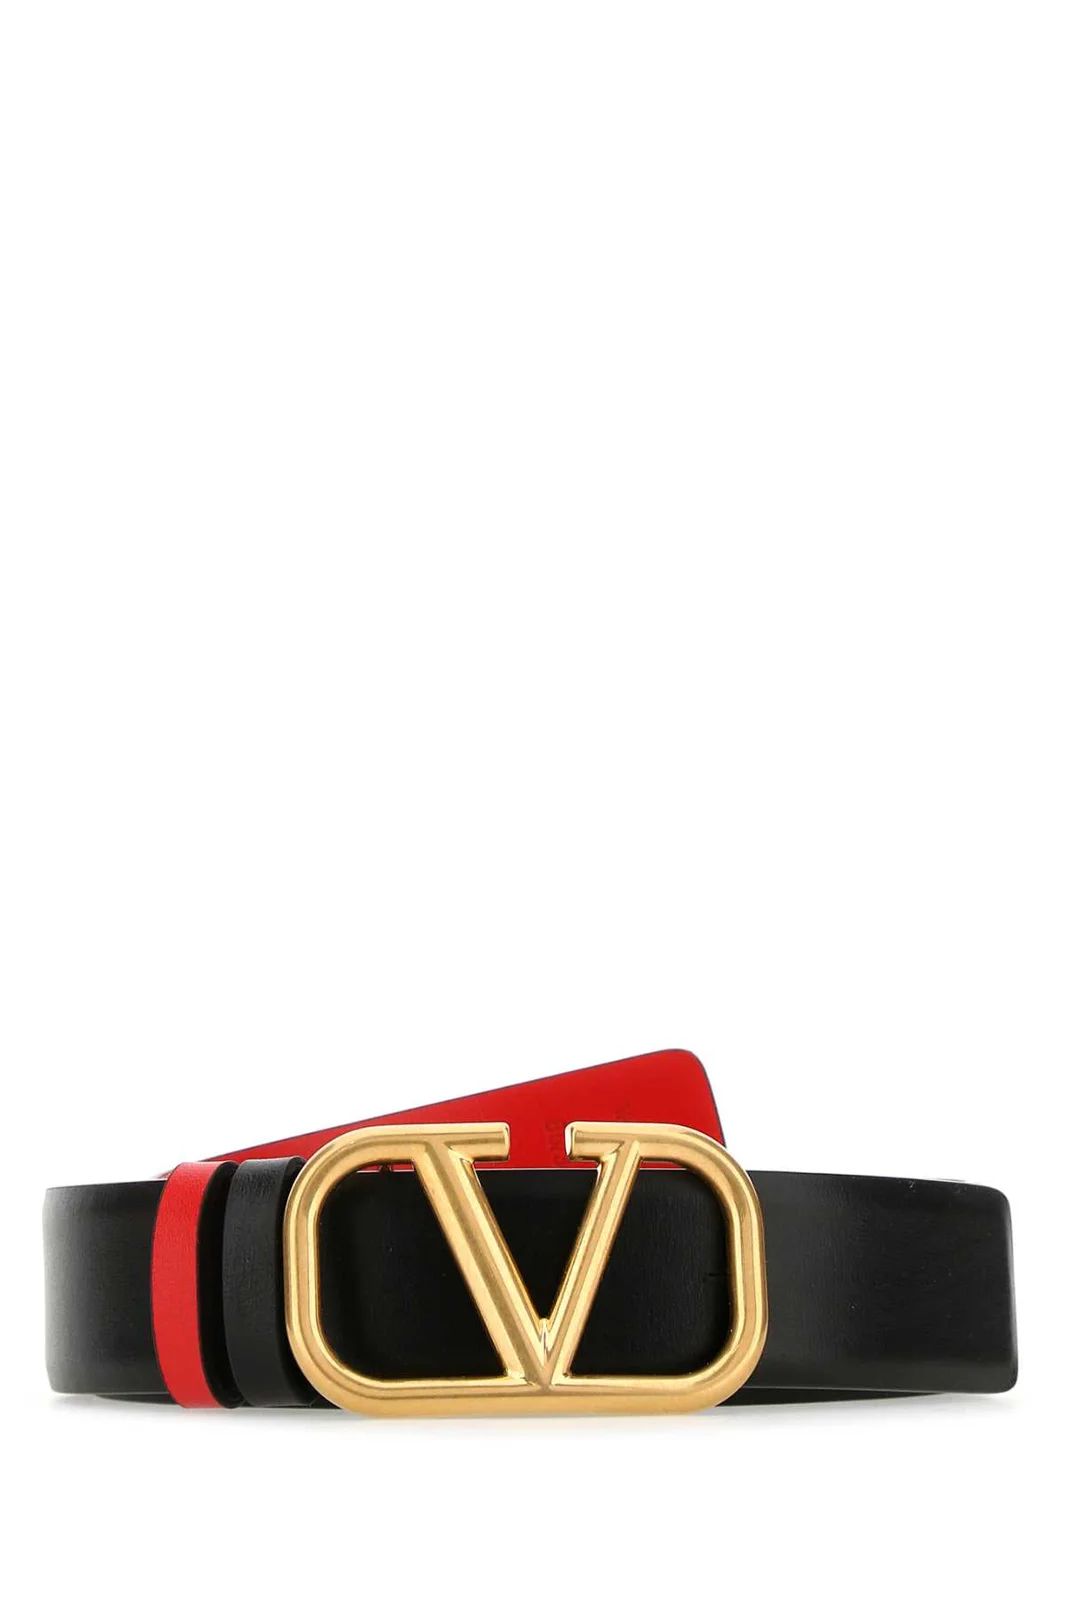 Valentino VLogo Plaque Reversible Belt | Cettire Global